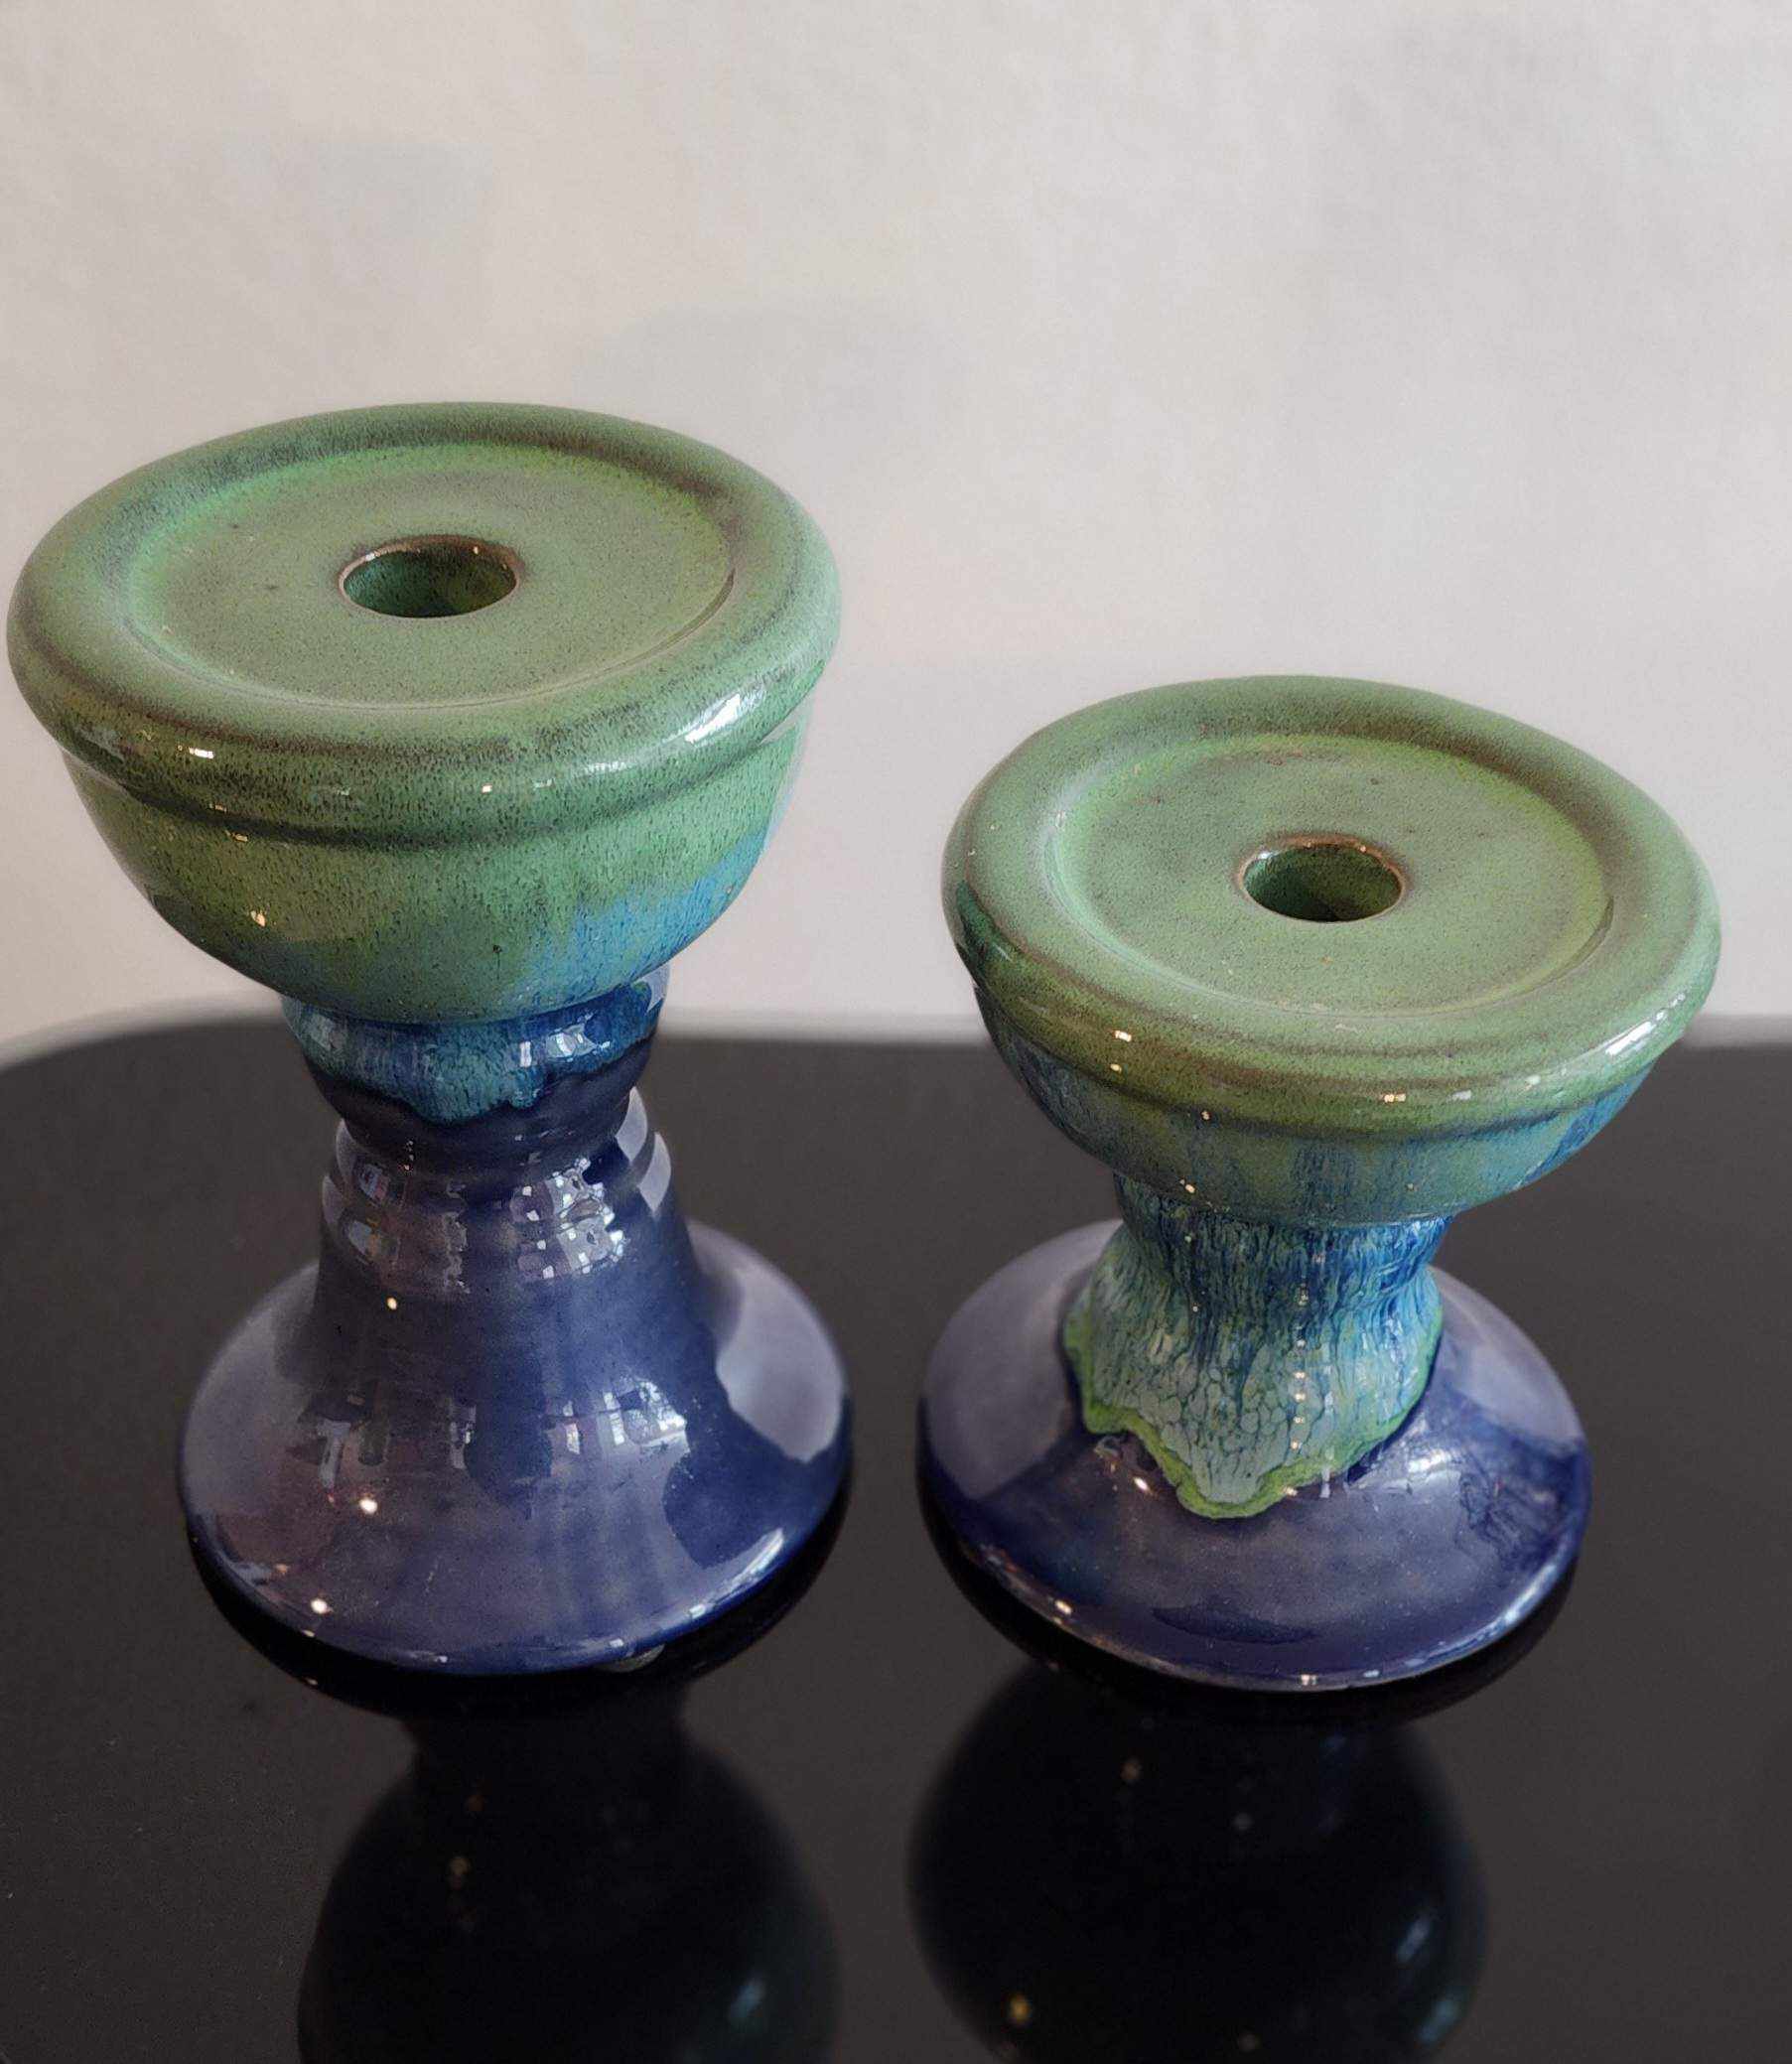  Blue & Green Glazed Ceramic Candle Holder